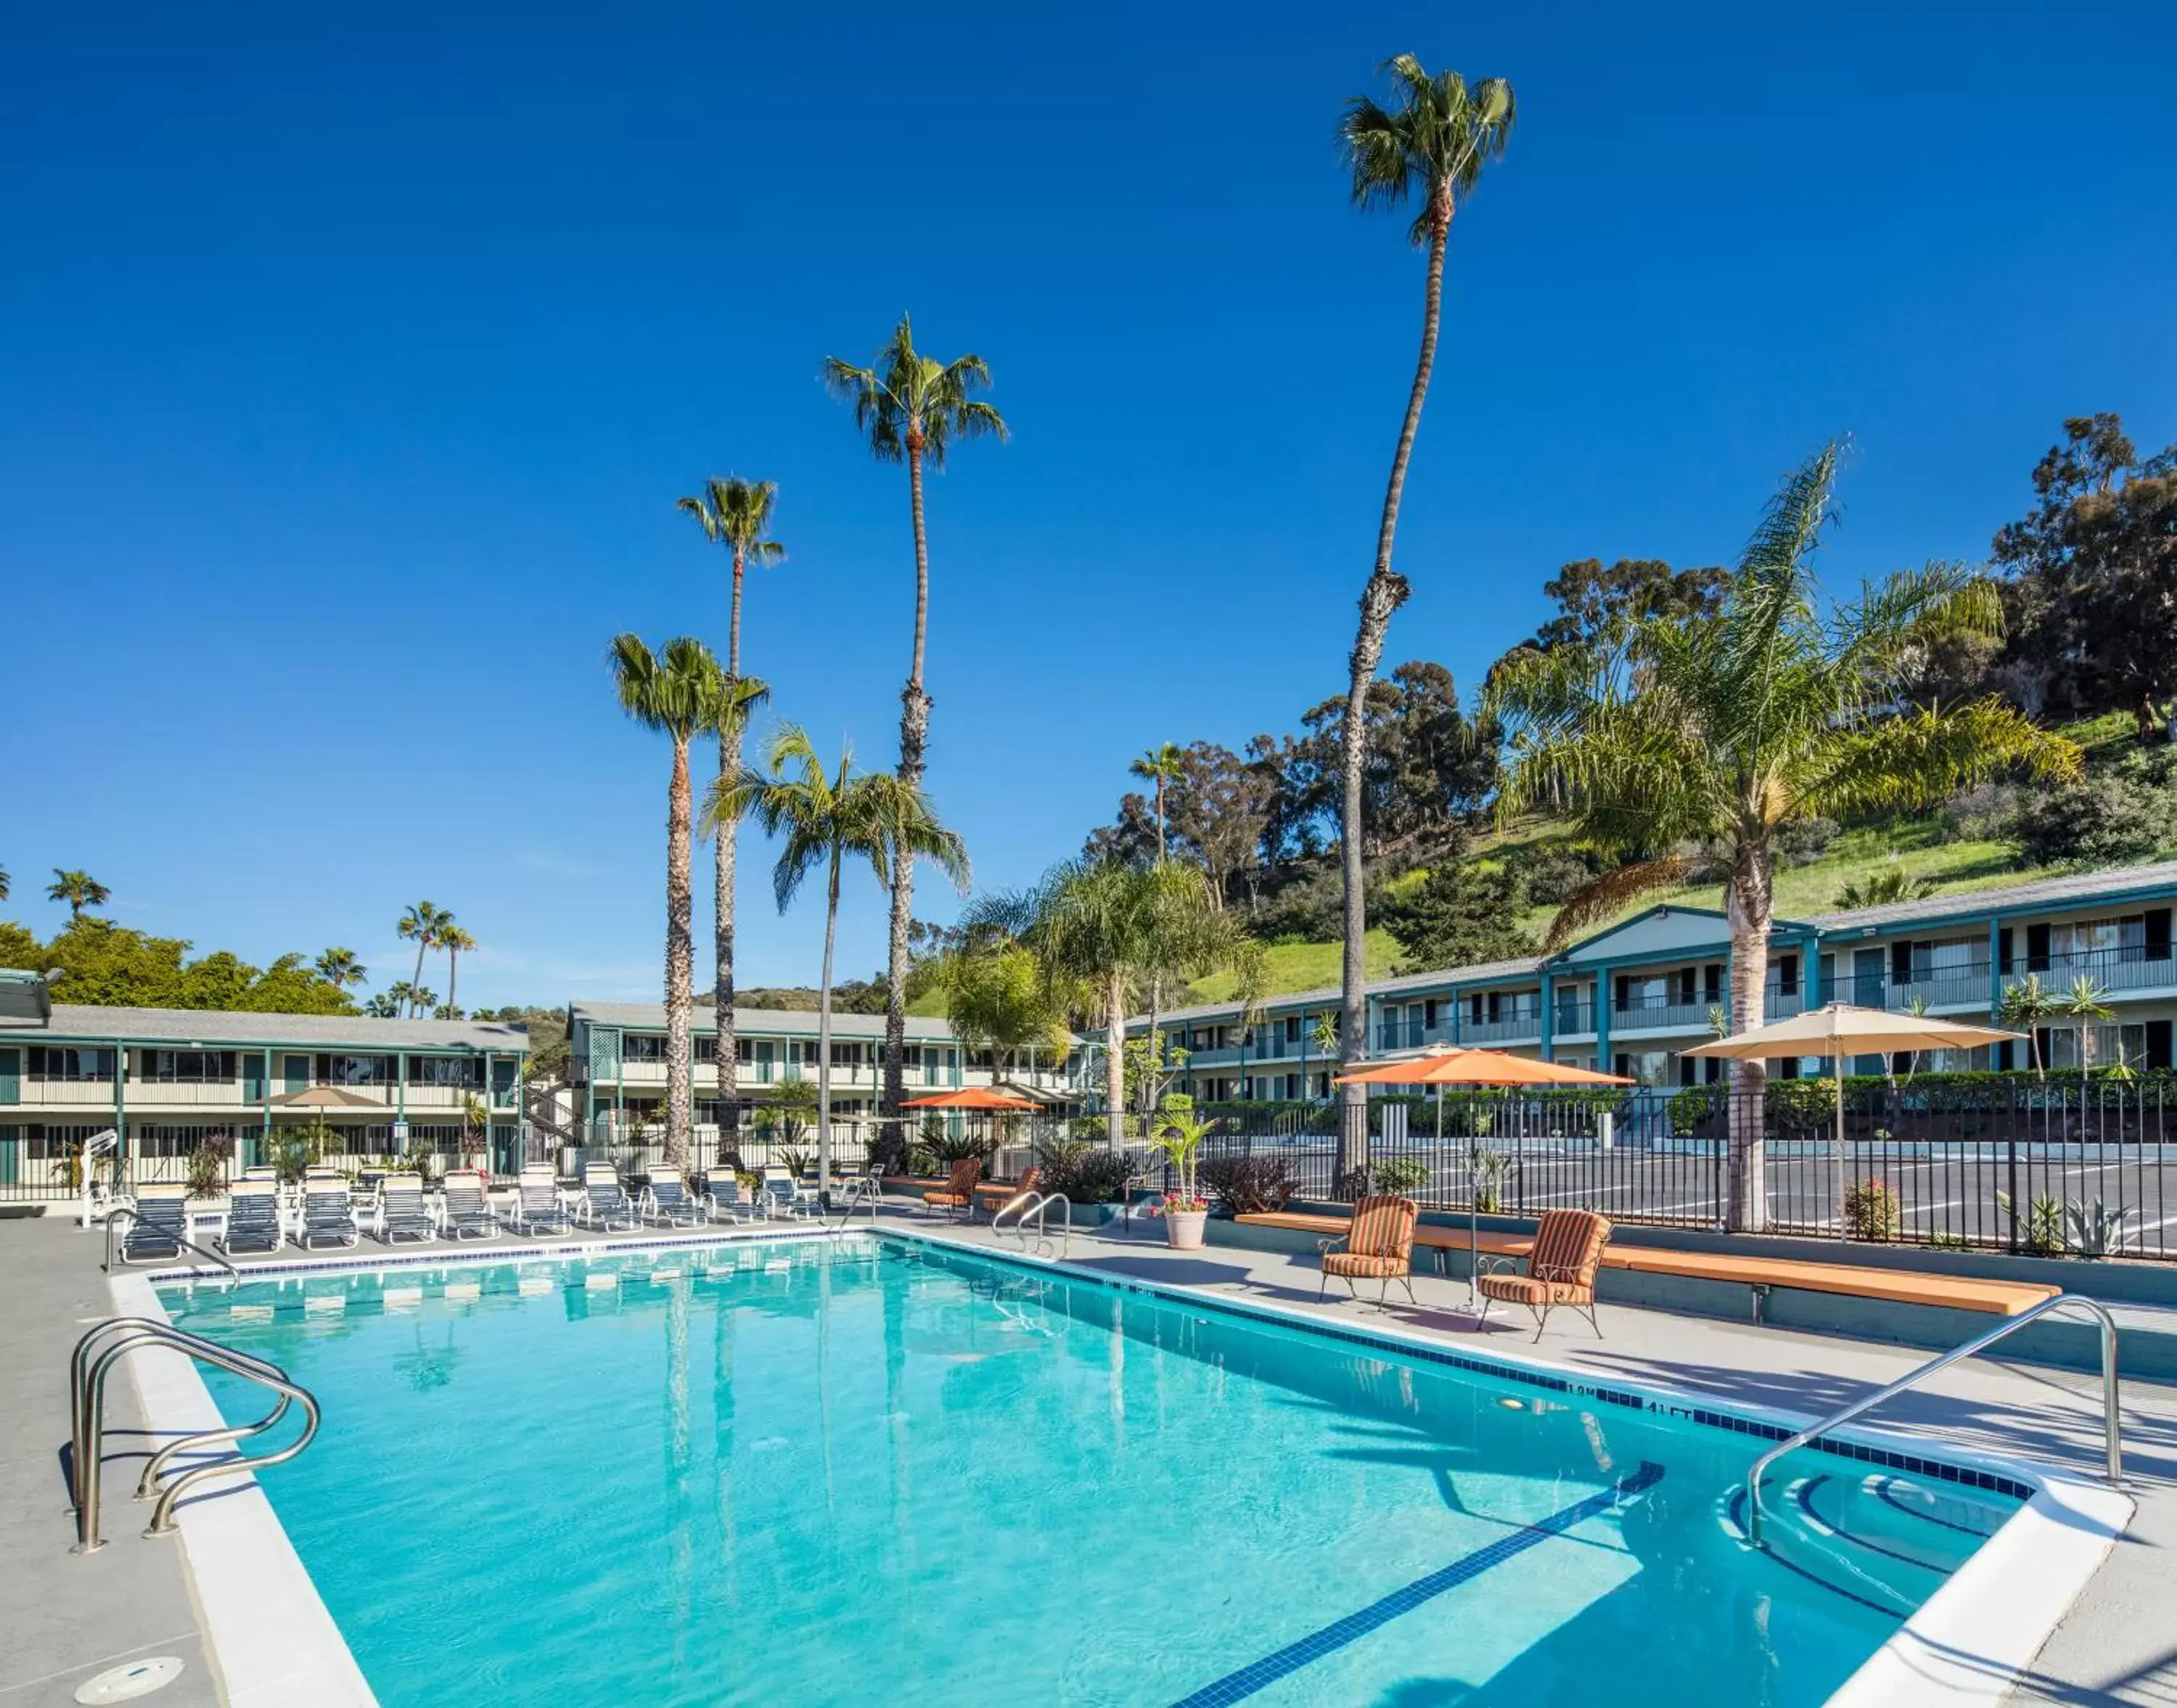 Swimming Pool in The Atwood Hotel San Diego - SeaWorld/Zoo